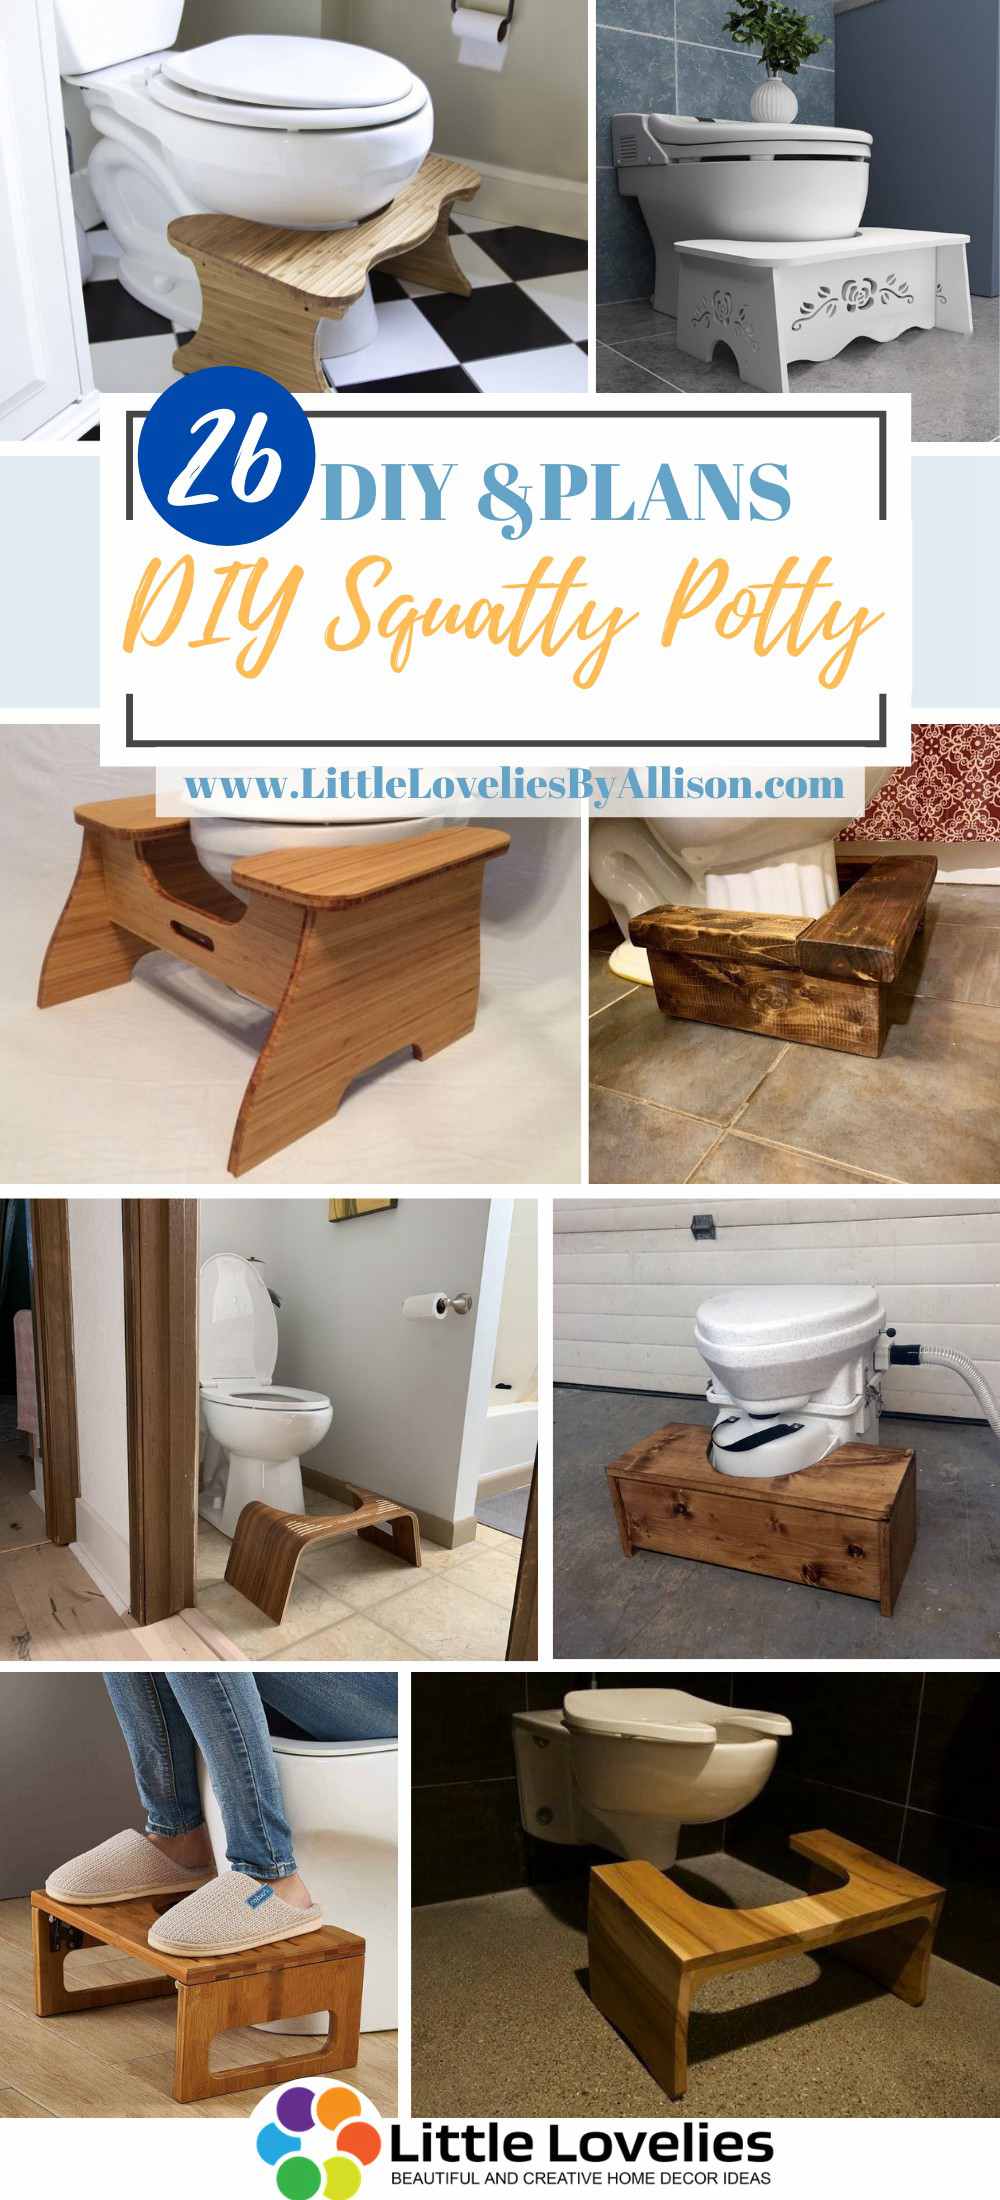 Best DIY Squatty Potty Ideas